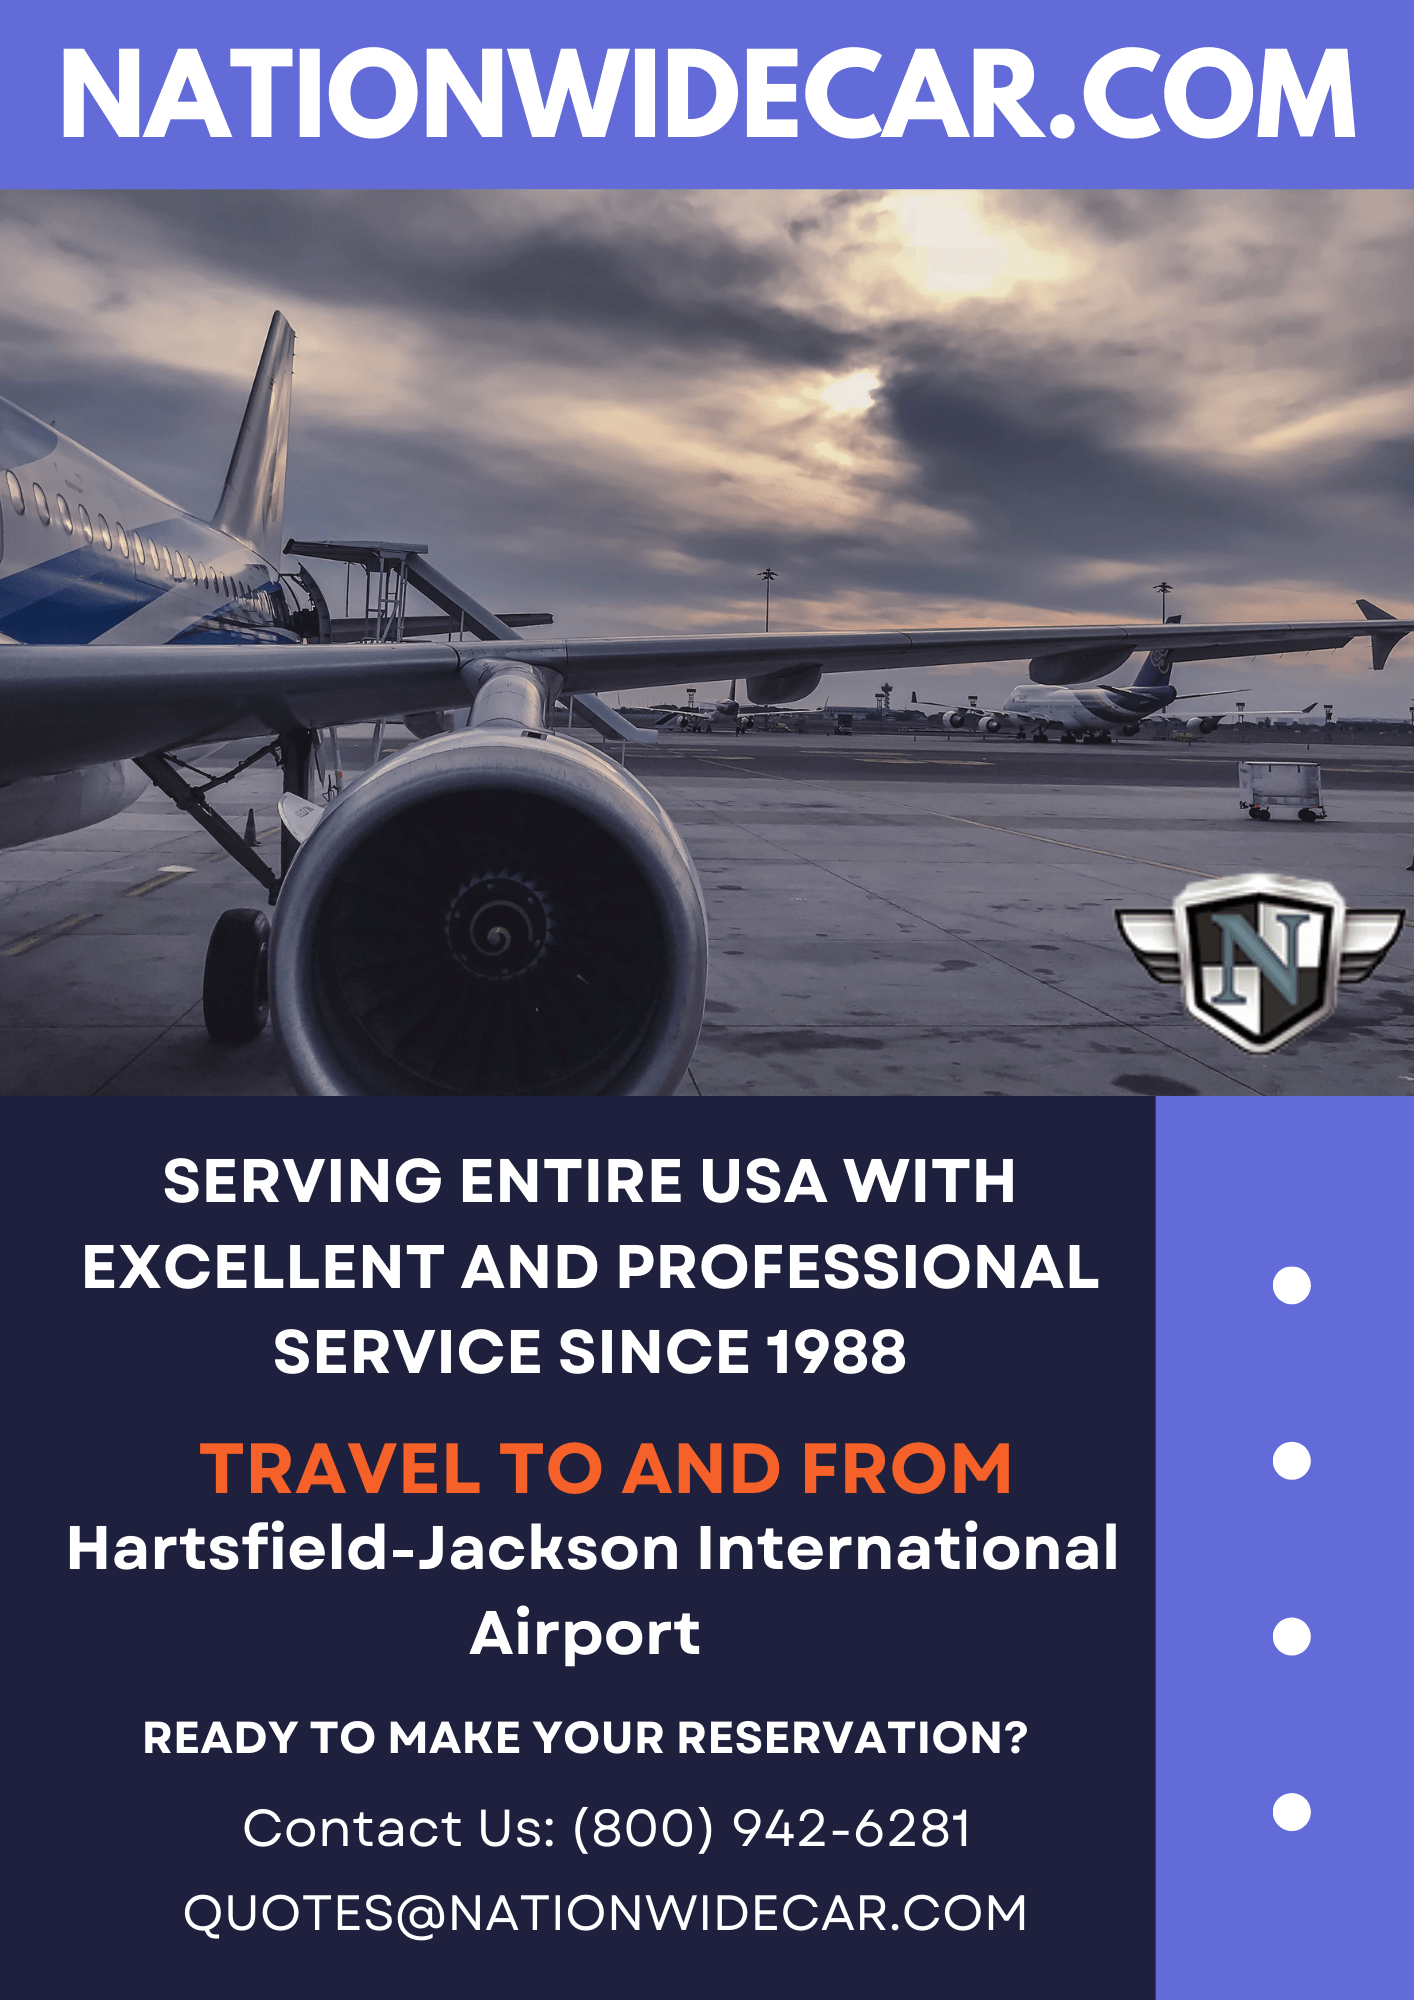 Travel To and From Hartsfield-Jackson Atlanta International Airport(ATL)